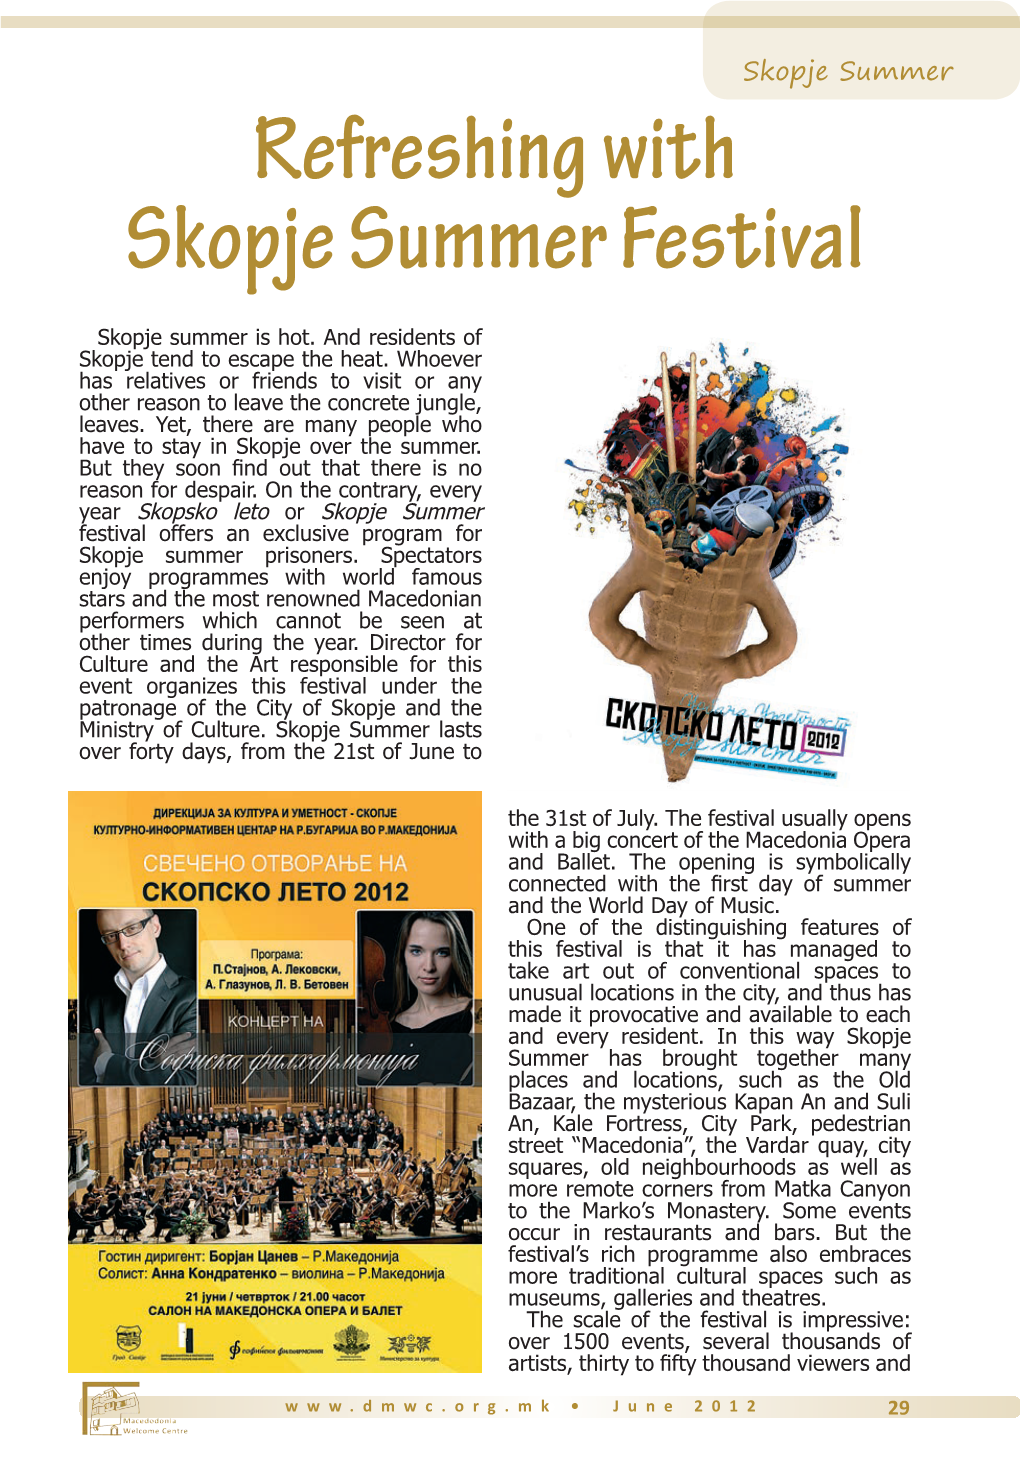 Refreshing with Skopje Summer Festival